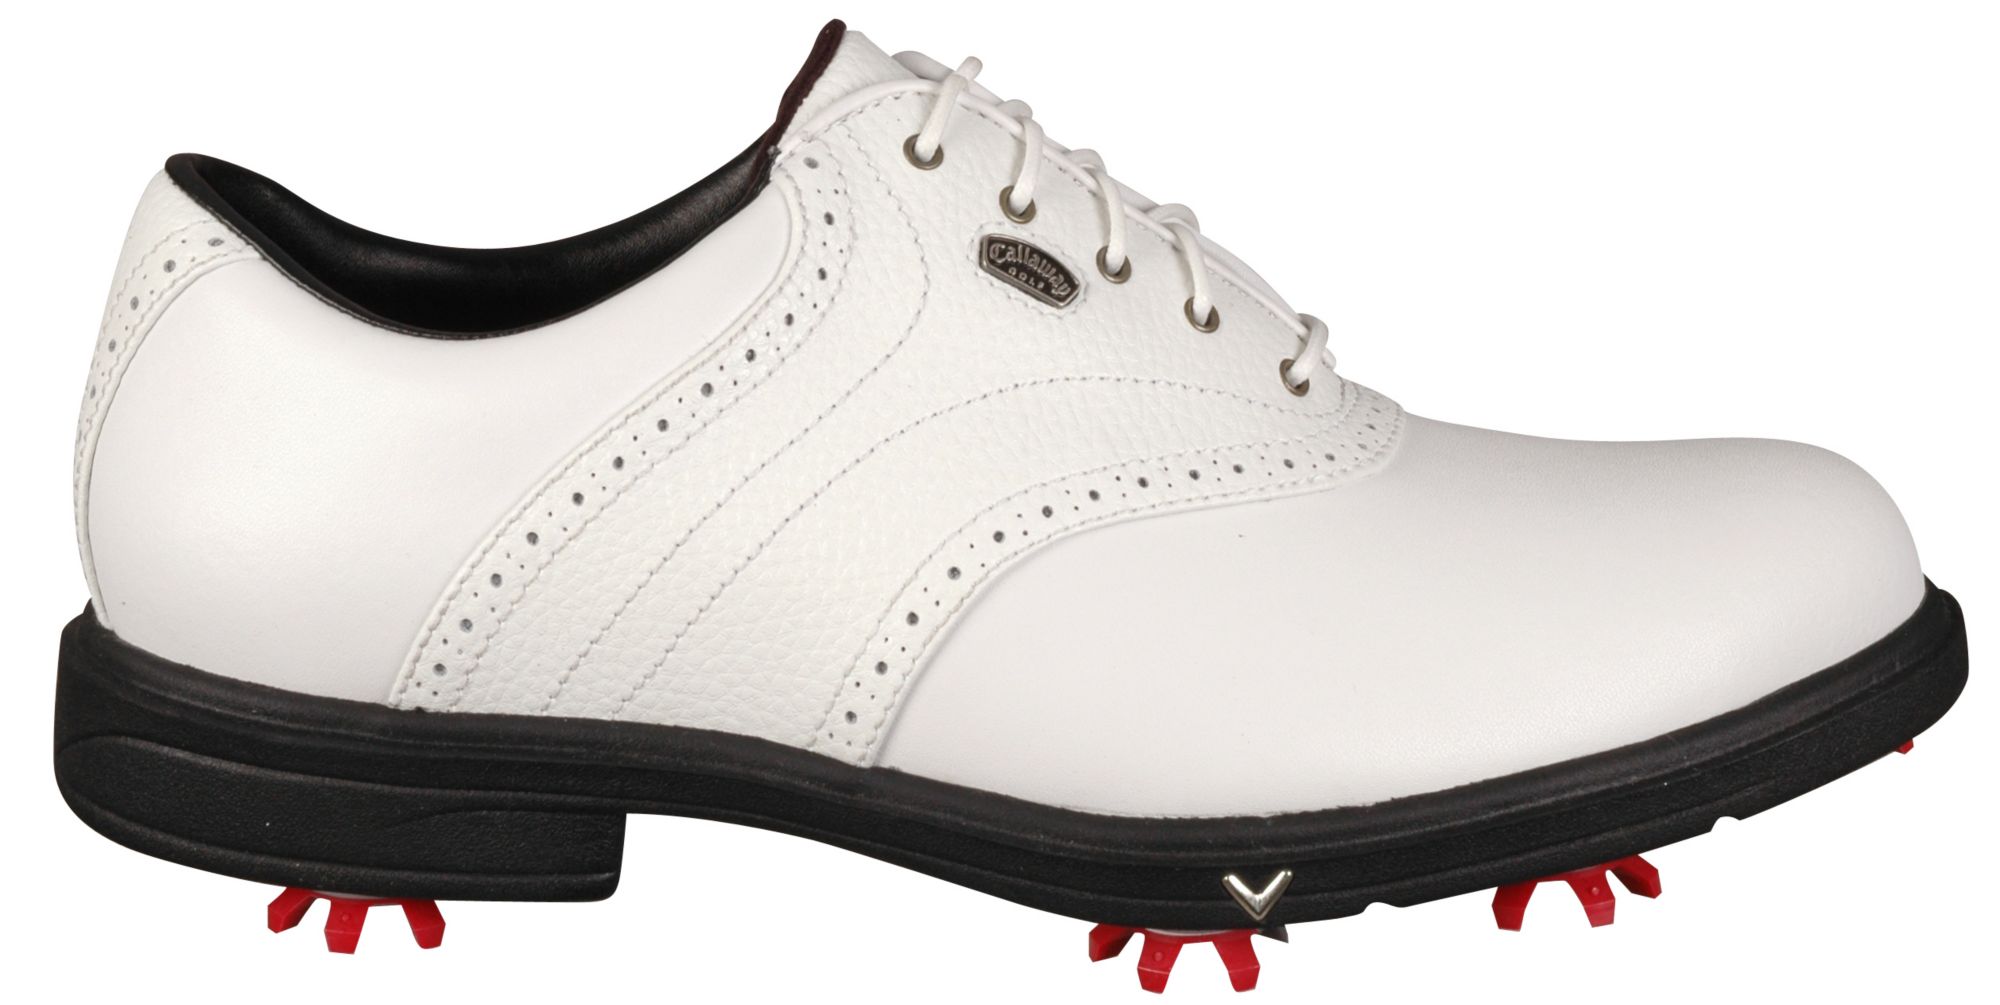 Mens Callaway Golf Shoes - Callaway Mens Golf Shoes for Sale at ...